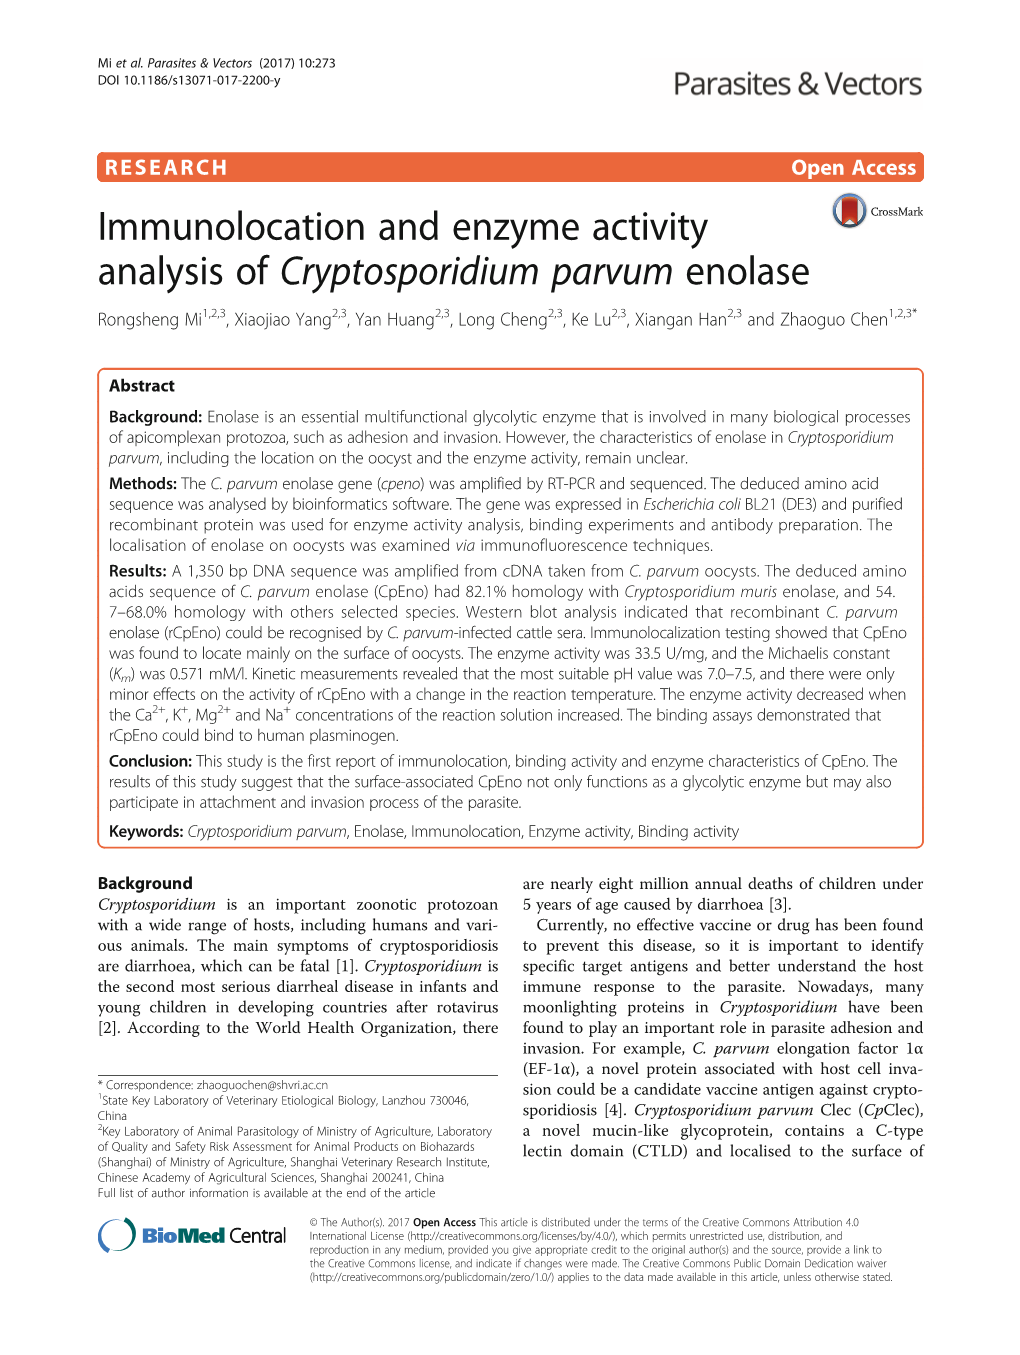 Immunolocation and Enzyme Activity Analysis of Cryptosporidium Parvum